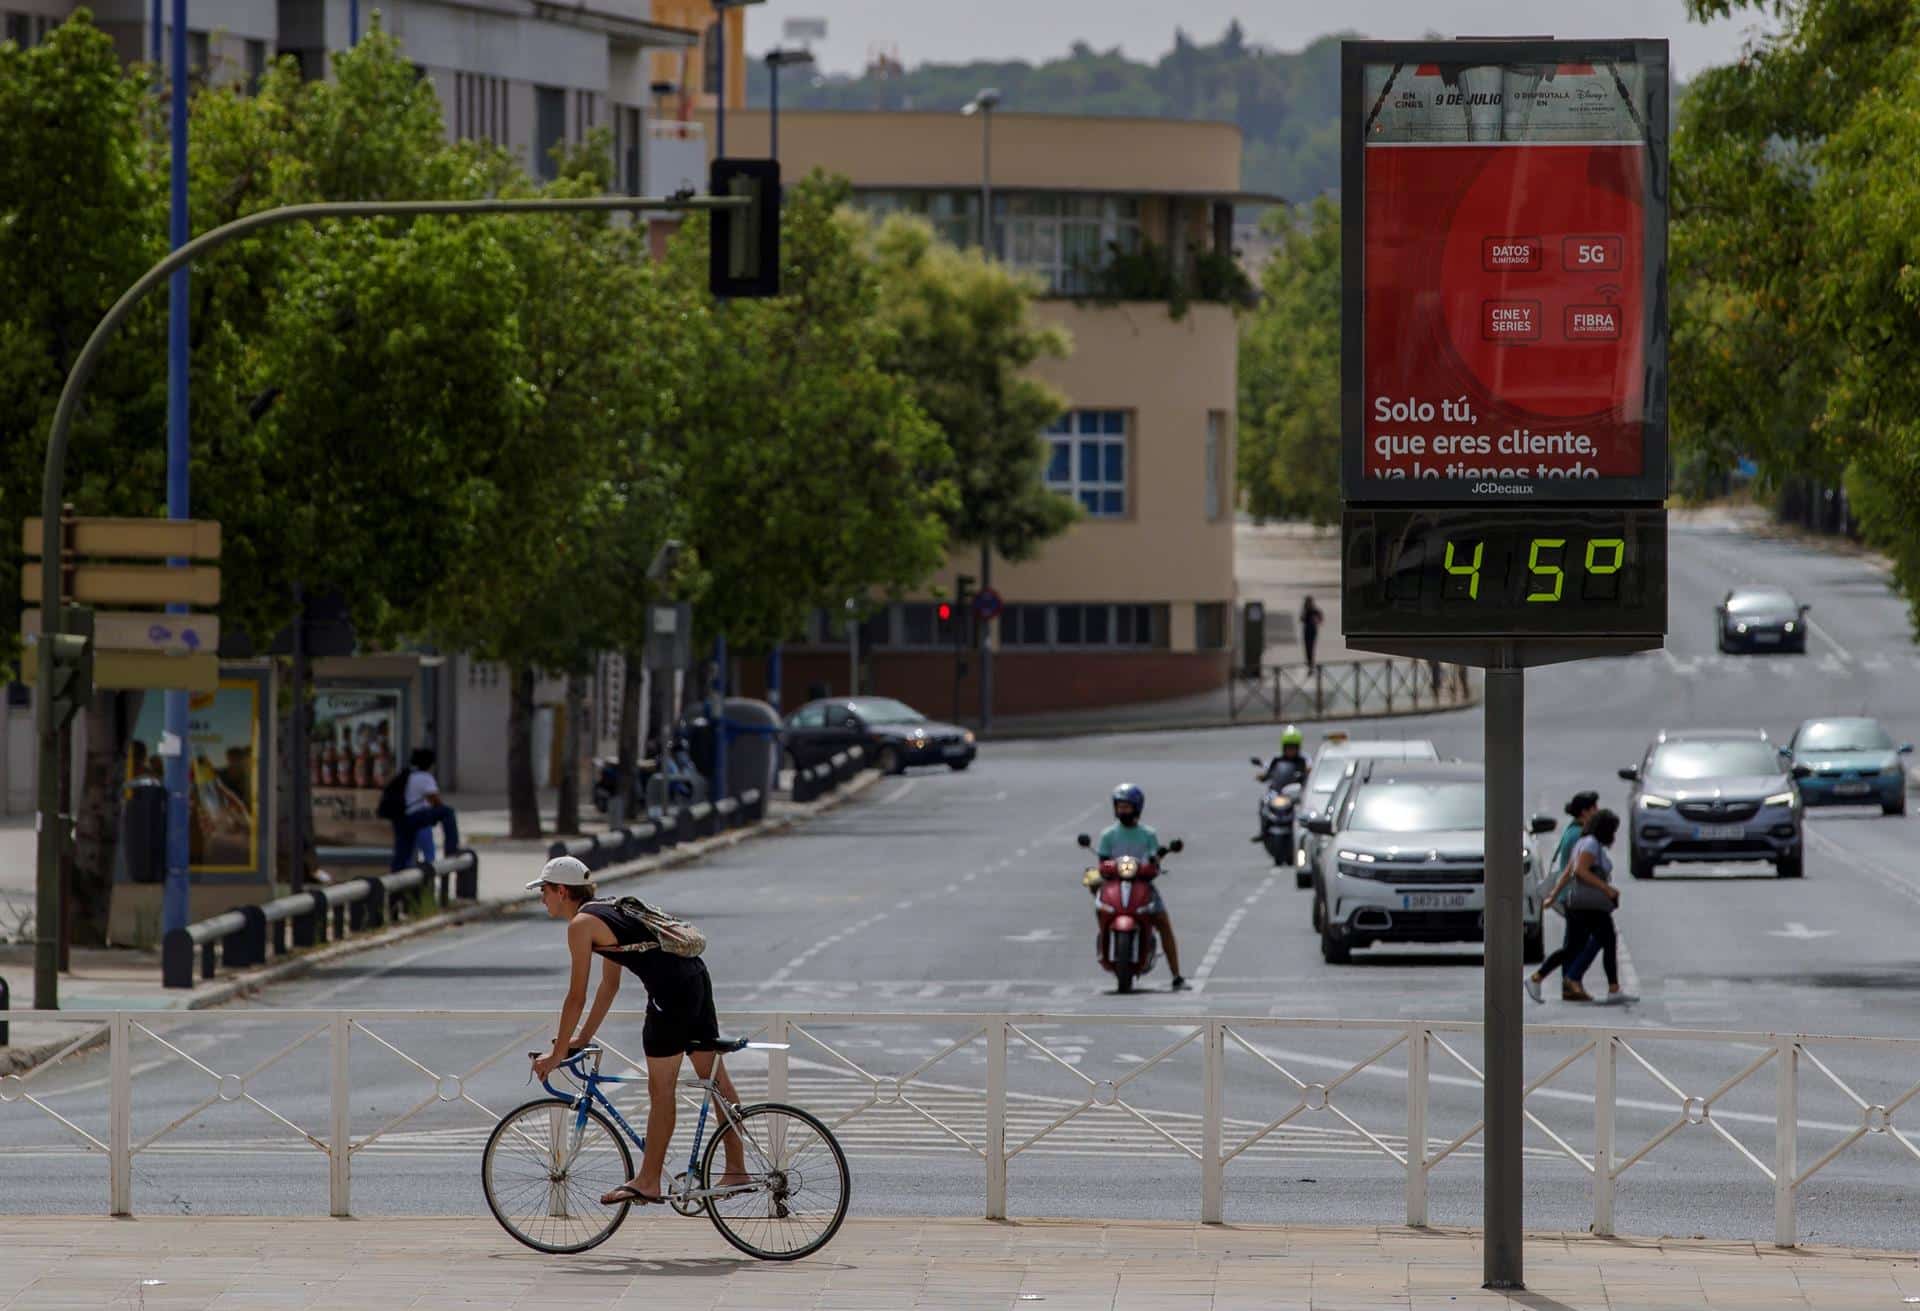 Un termómetro a pleno sol en Sevilla marca 45ºC.